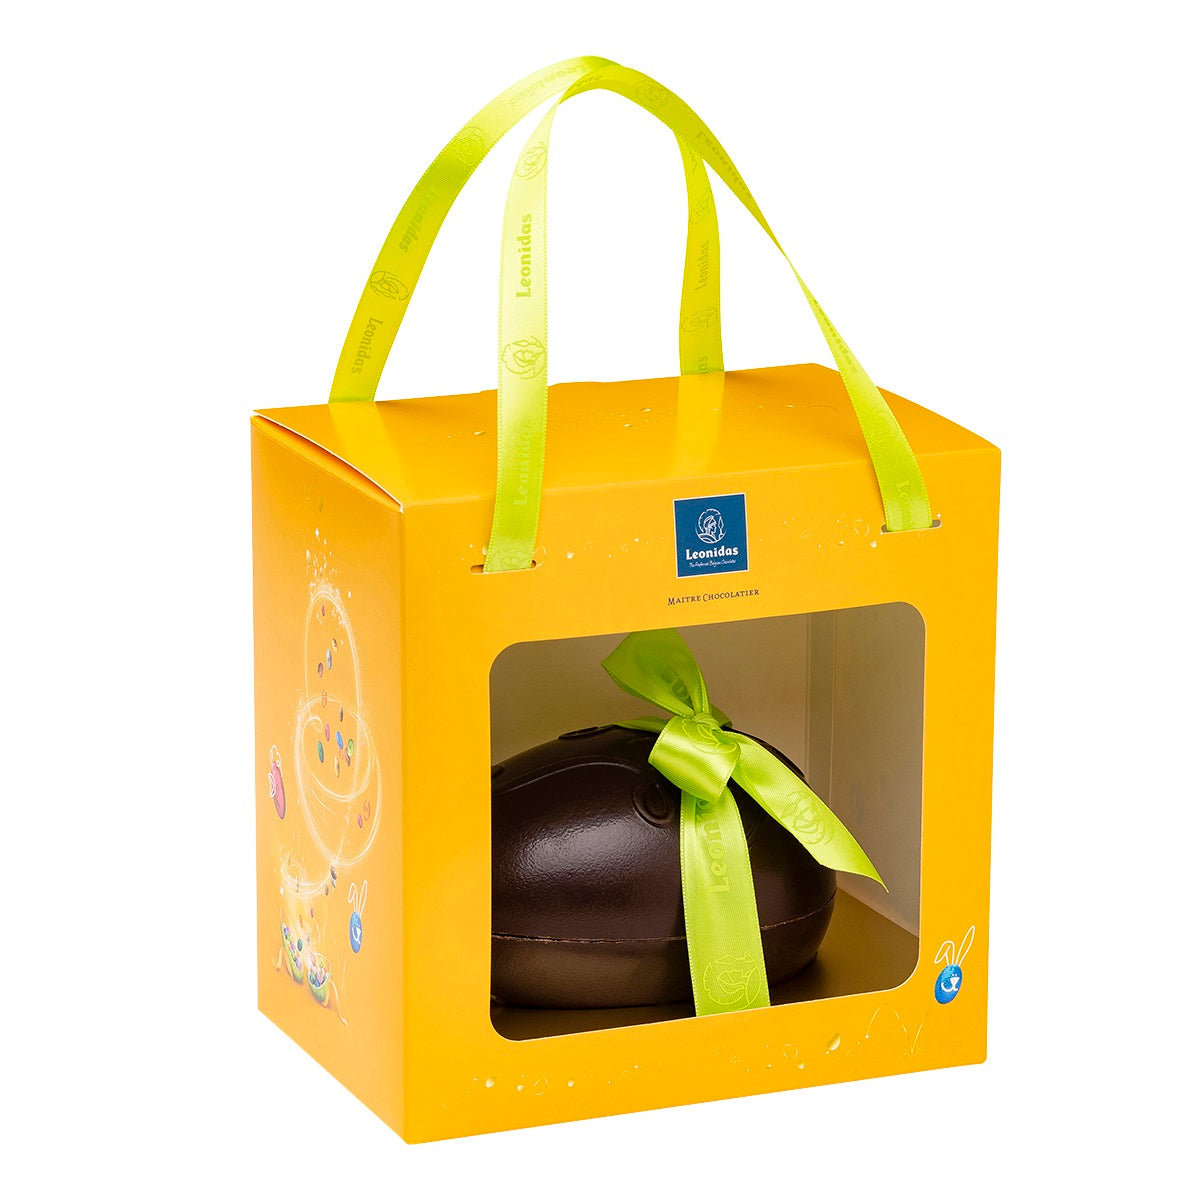 
                  
                    Size 1 - Leonidas Chocolate Easter Egg in Gift Box + 8 Mini Eggs
                  
                